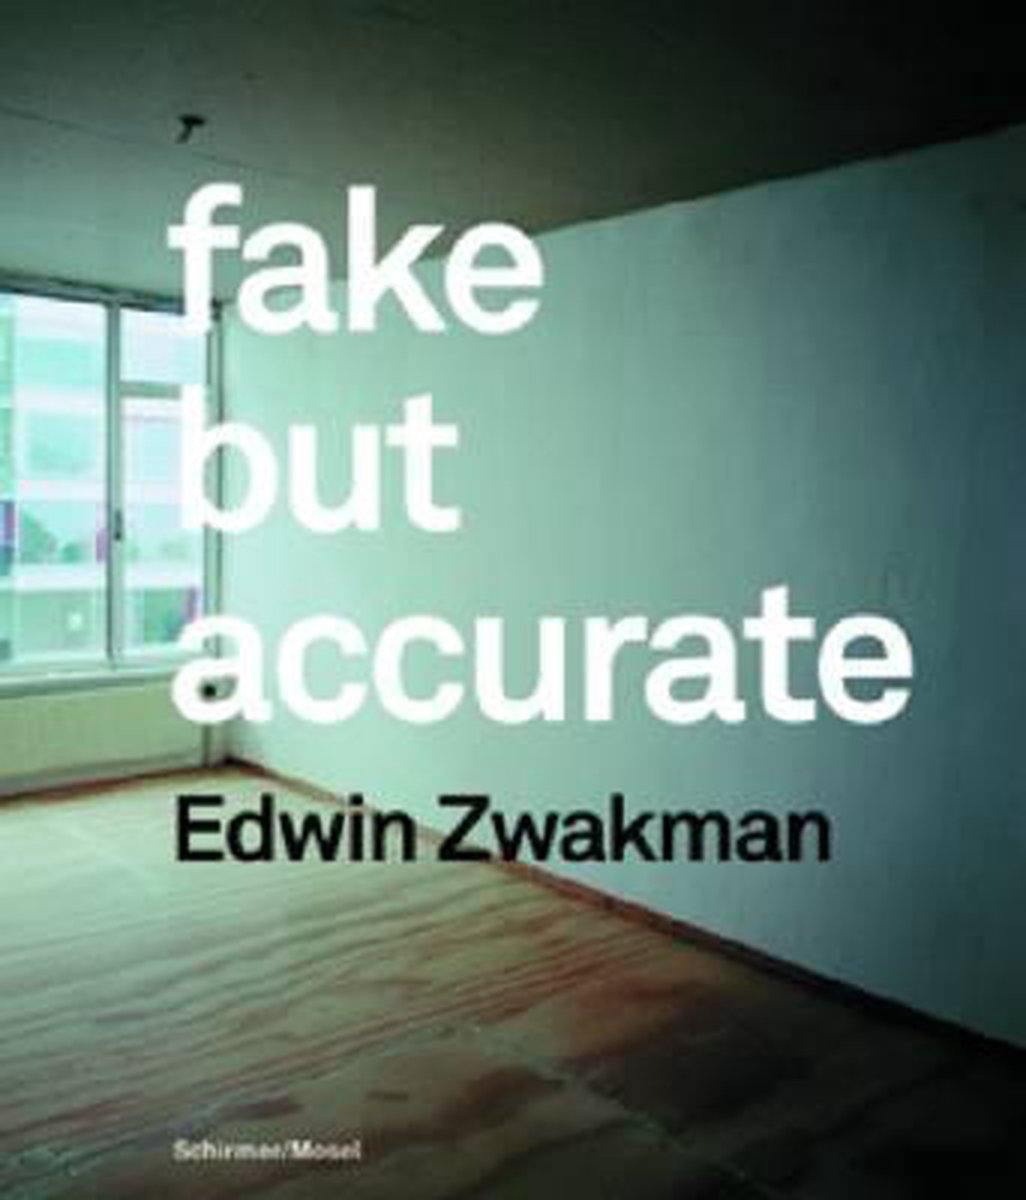 Edwin Zwakman